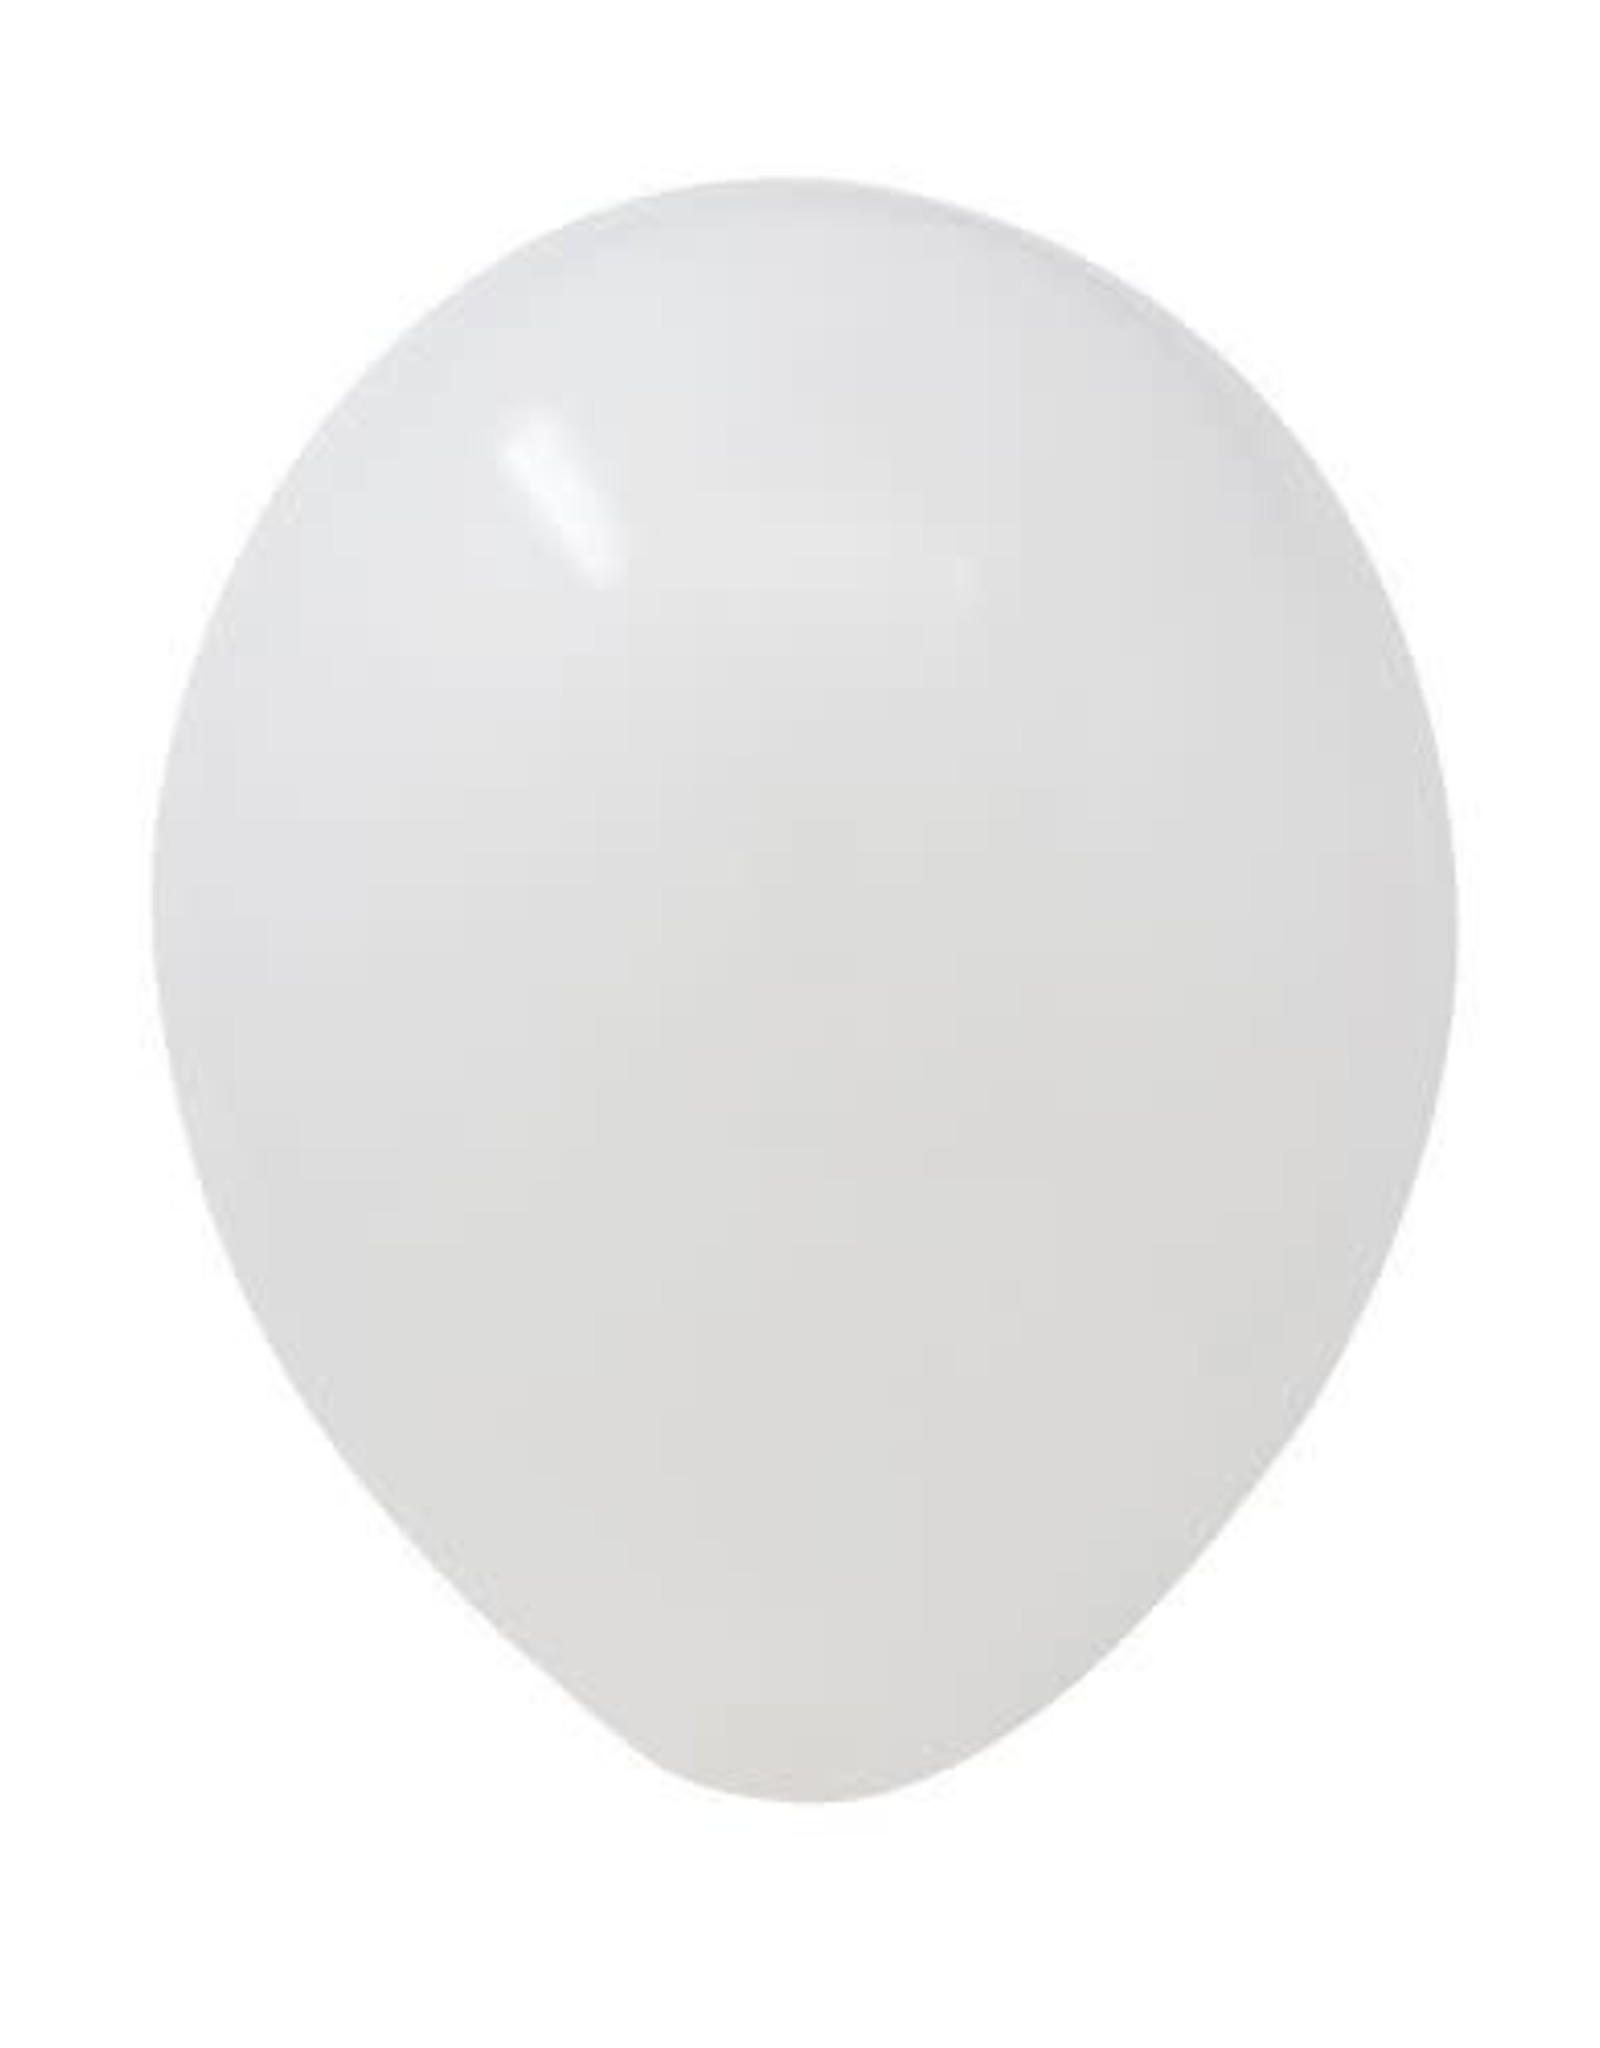 16'' White Latex Balloons 20ct